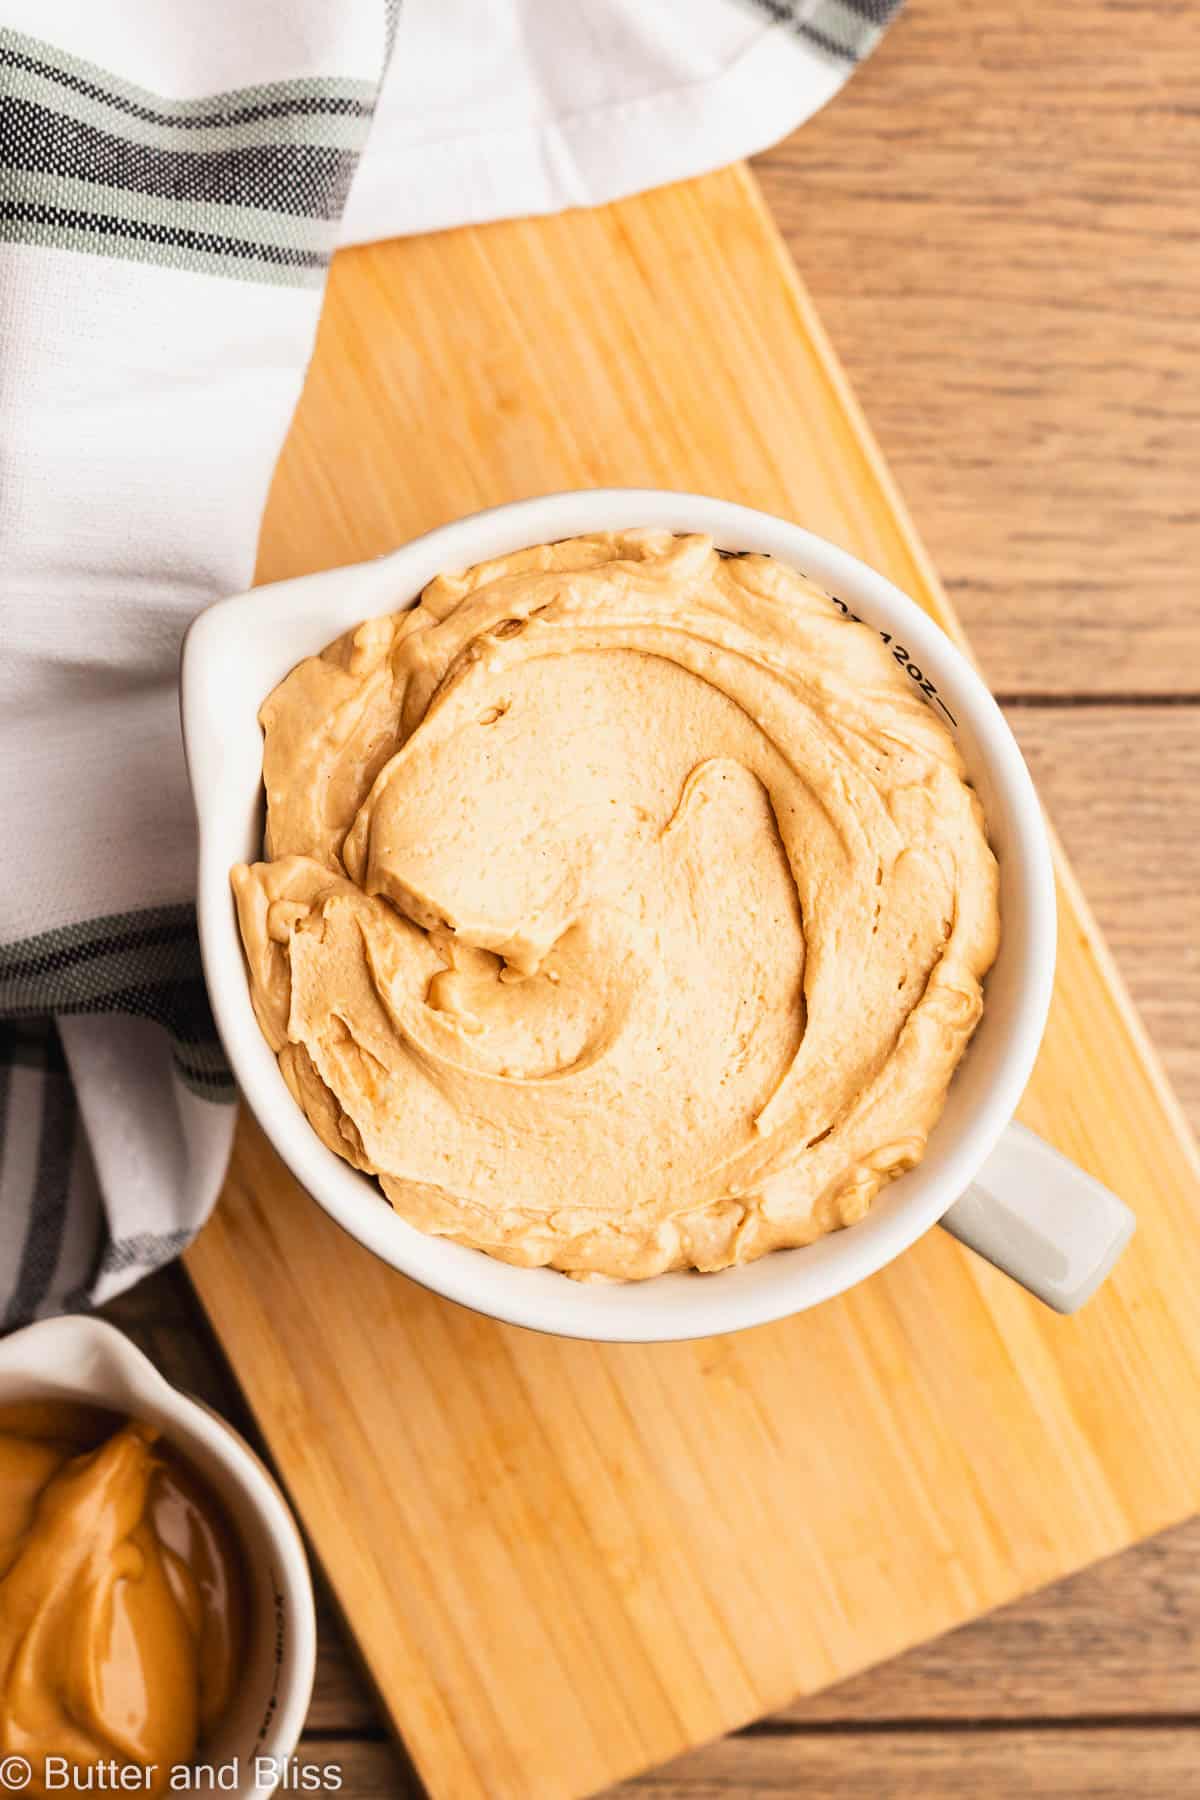 Creamy peanut butter fluff frosting in a pretty white bowl.